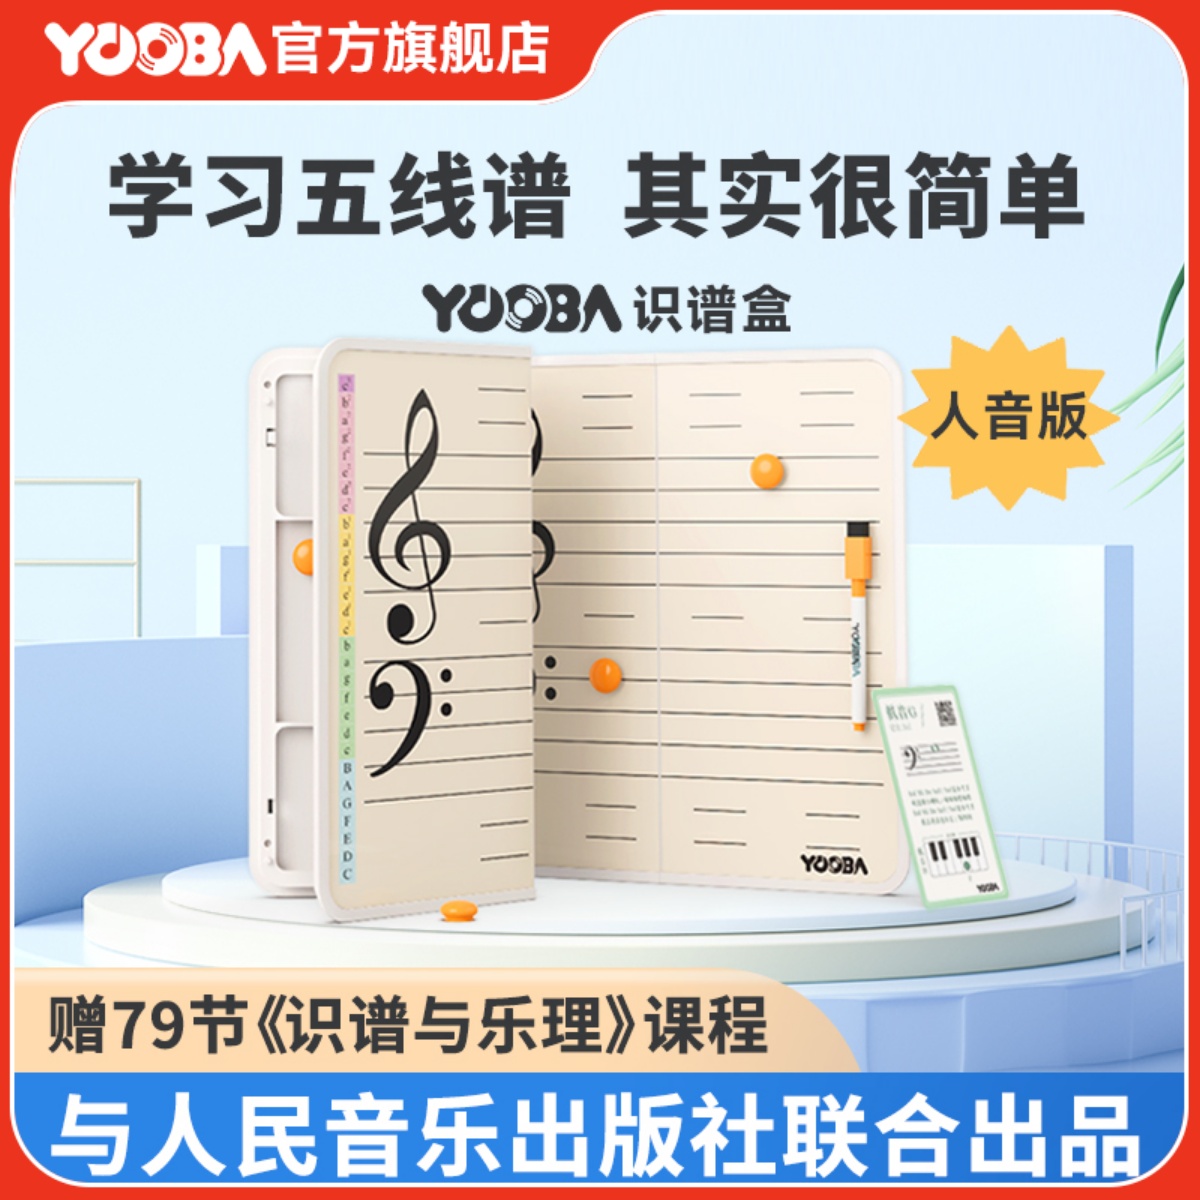 YOOBA佑爸识谱盒五线谱识谱神器启蒙乐理教具磁性白板可擦可折叠